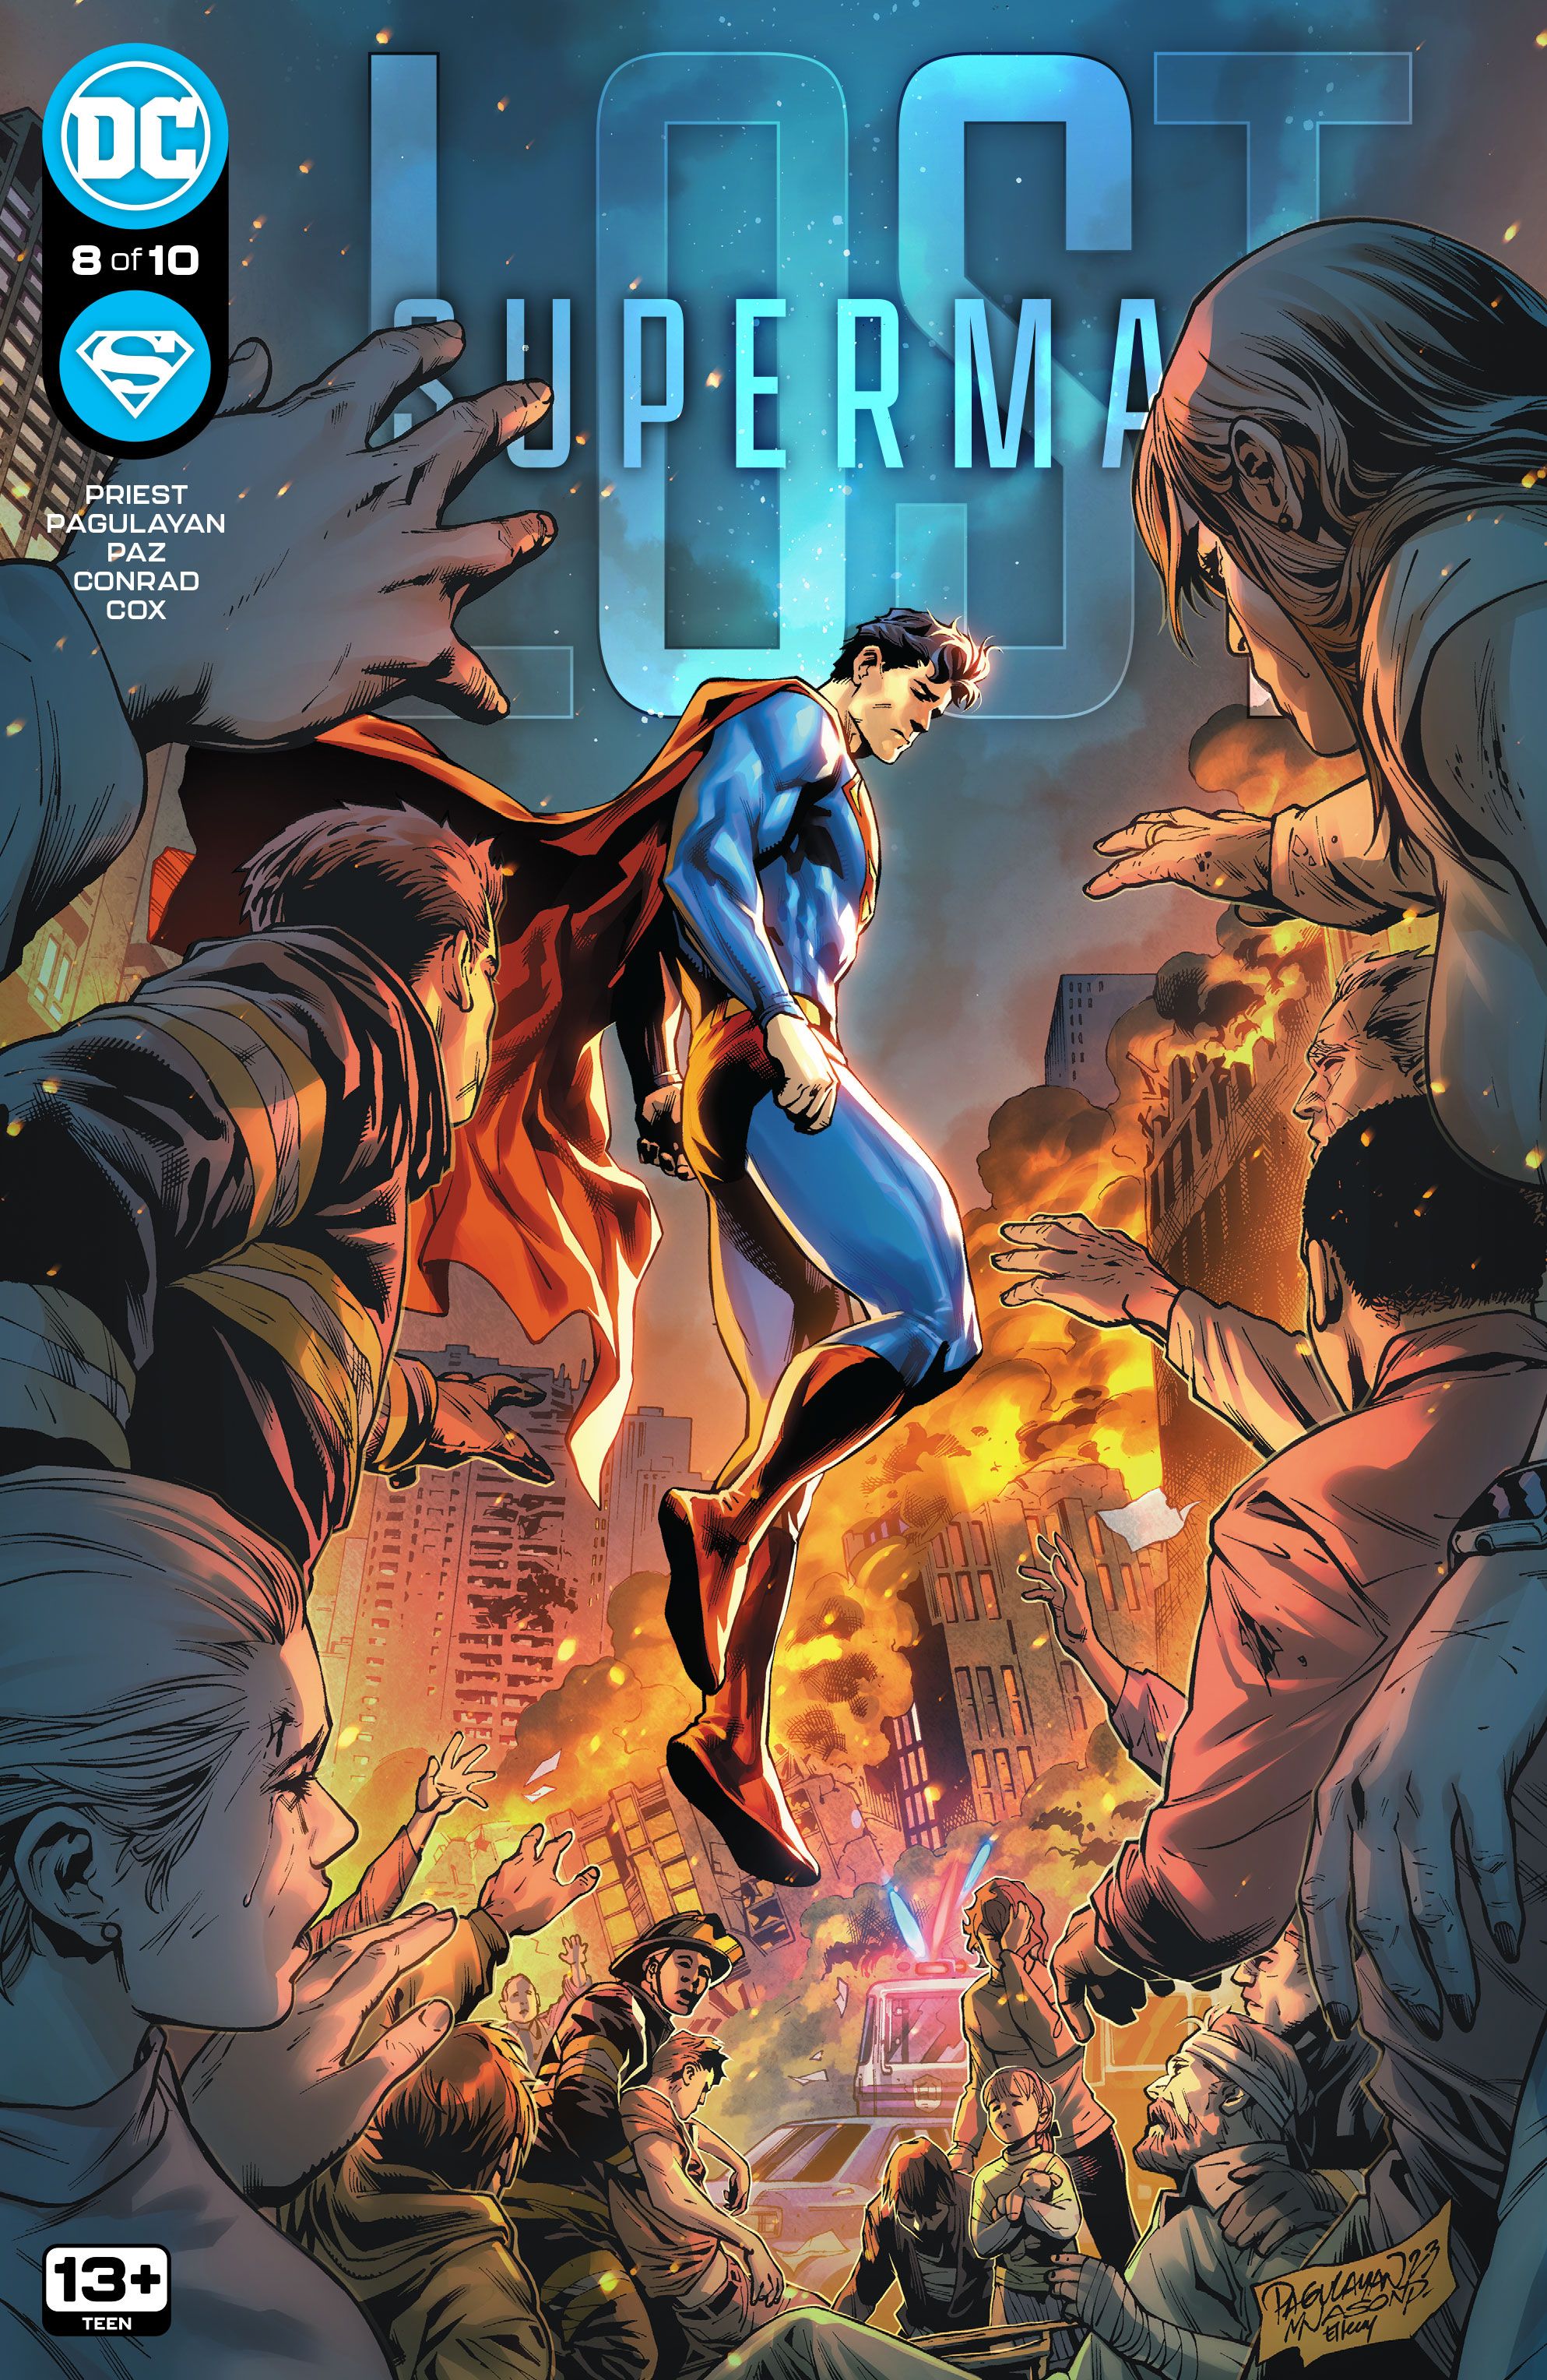 Superman Cover Art Recreates Iconic Batman v Superman Moment